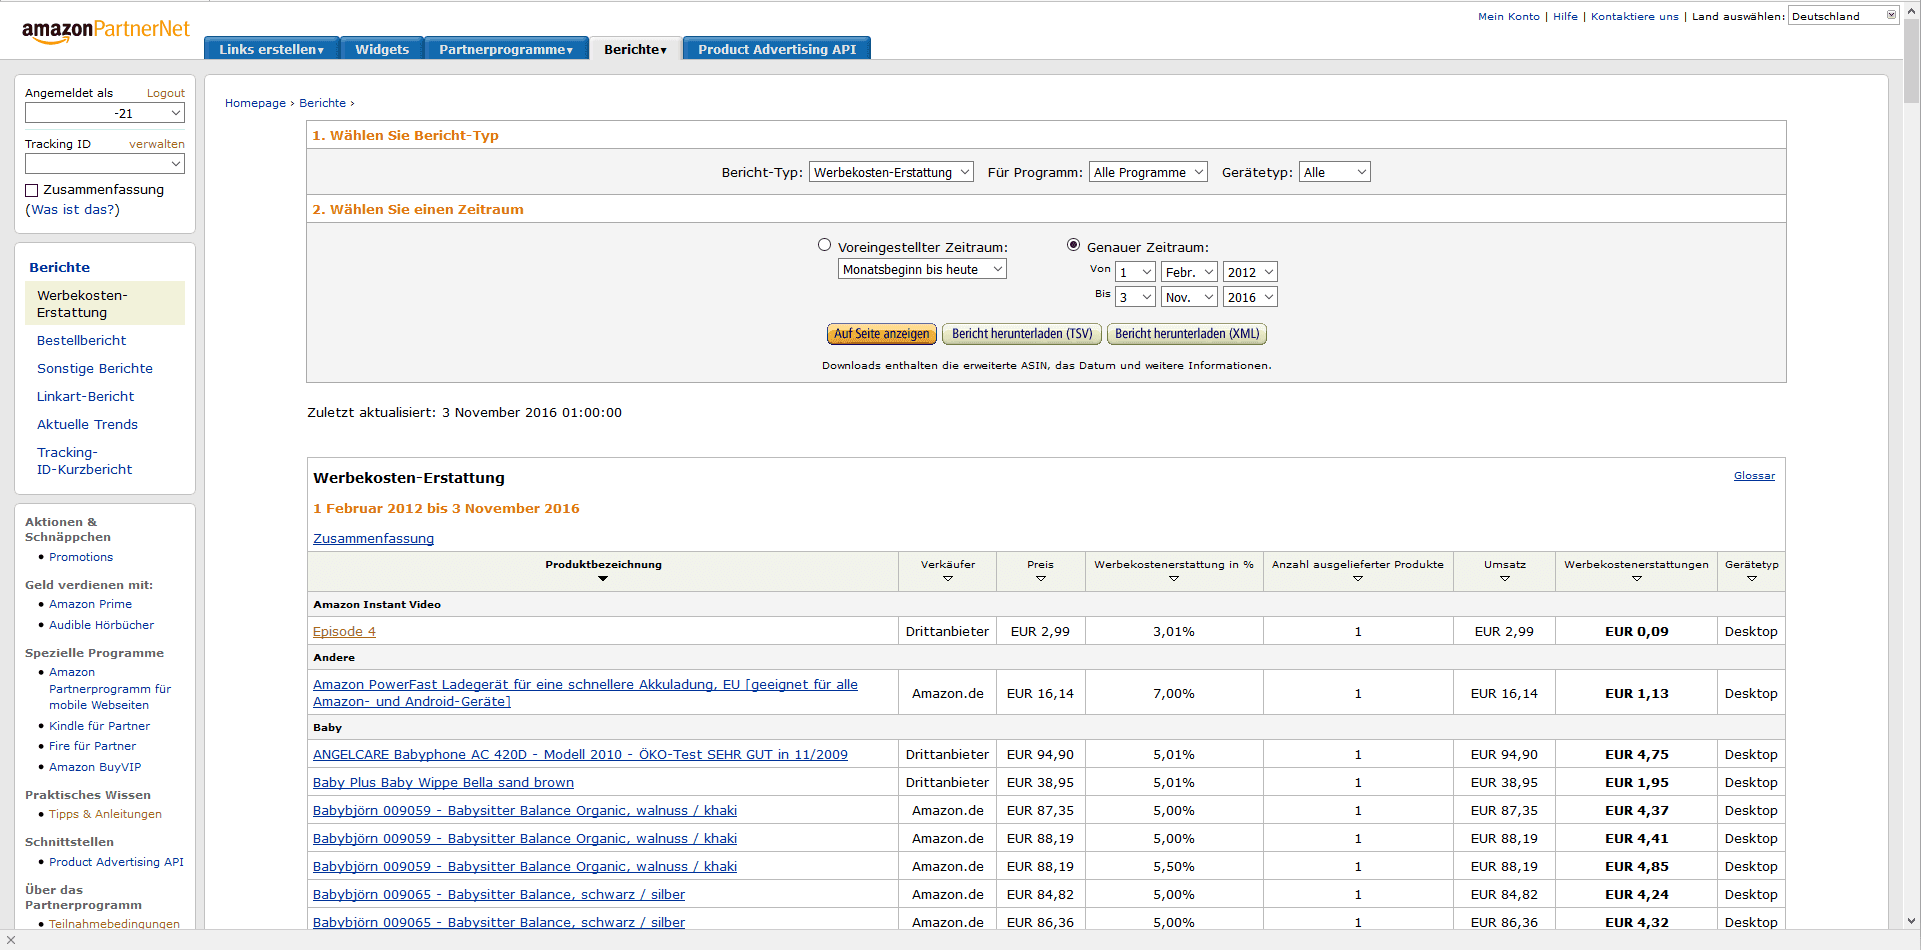 Amazon-PartnerNet Einnahmen